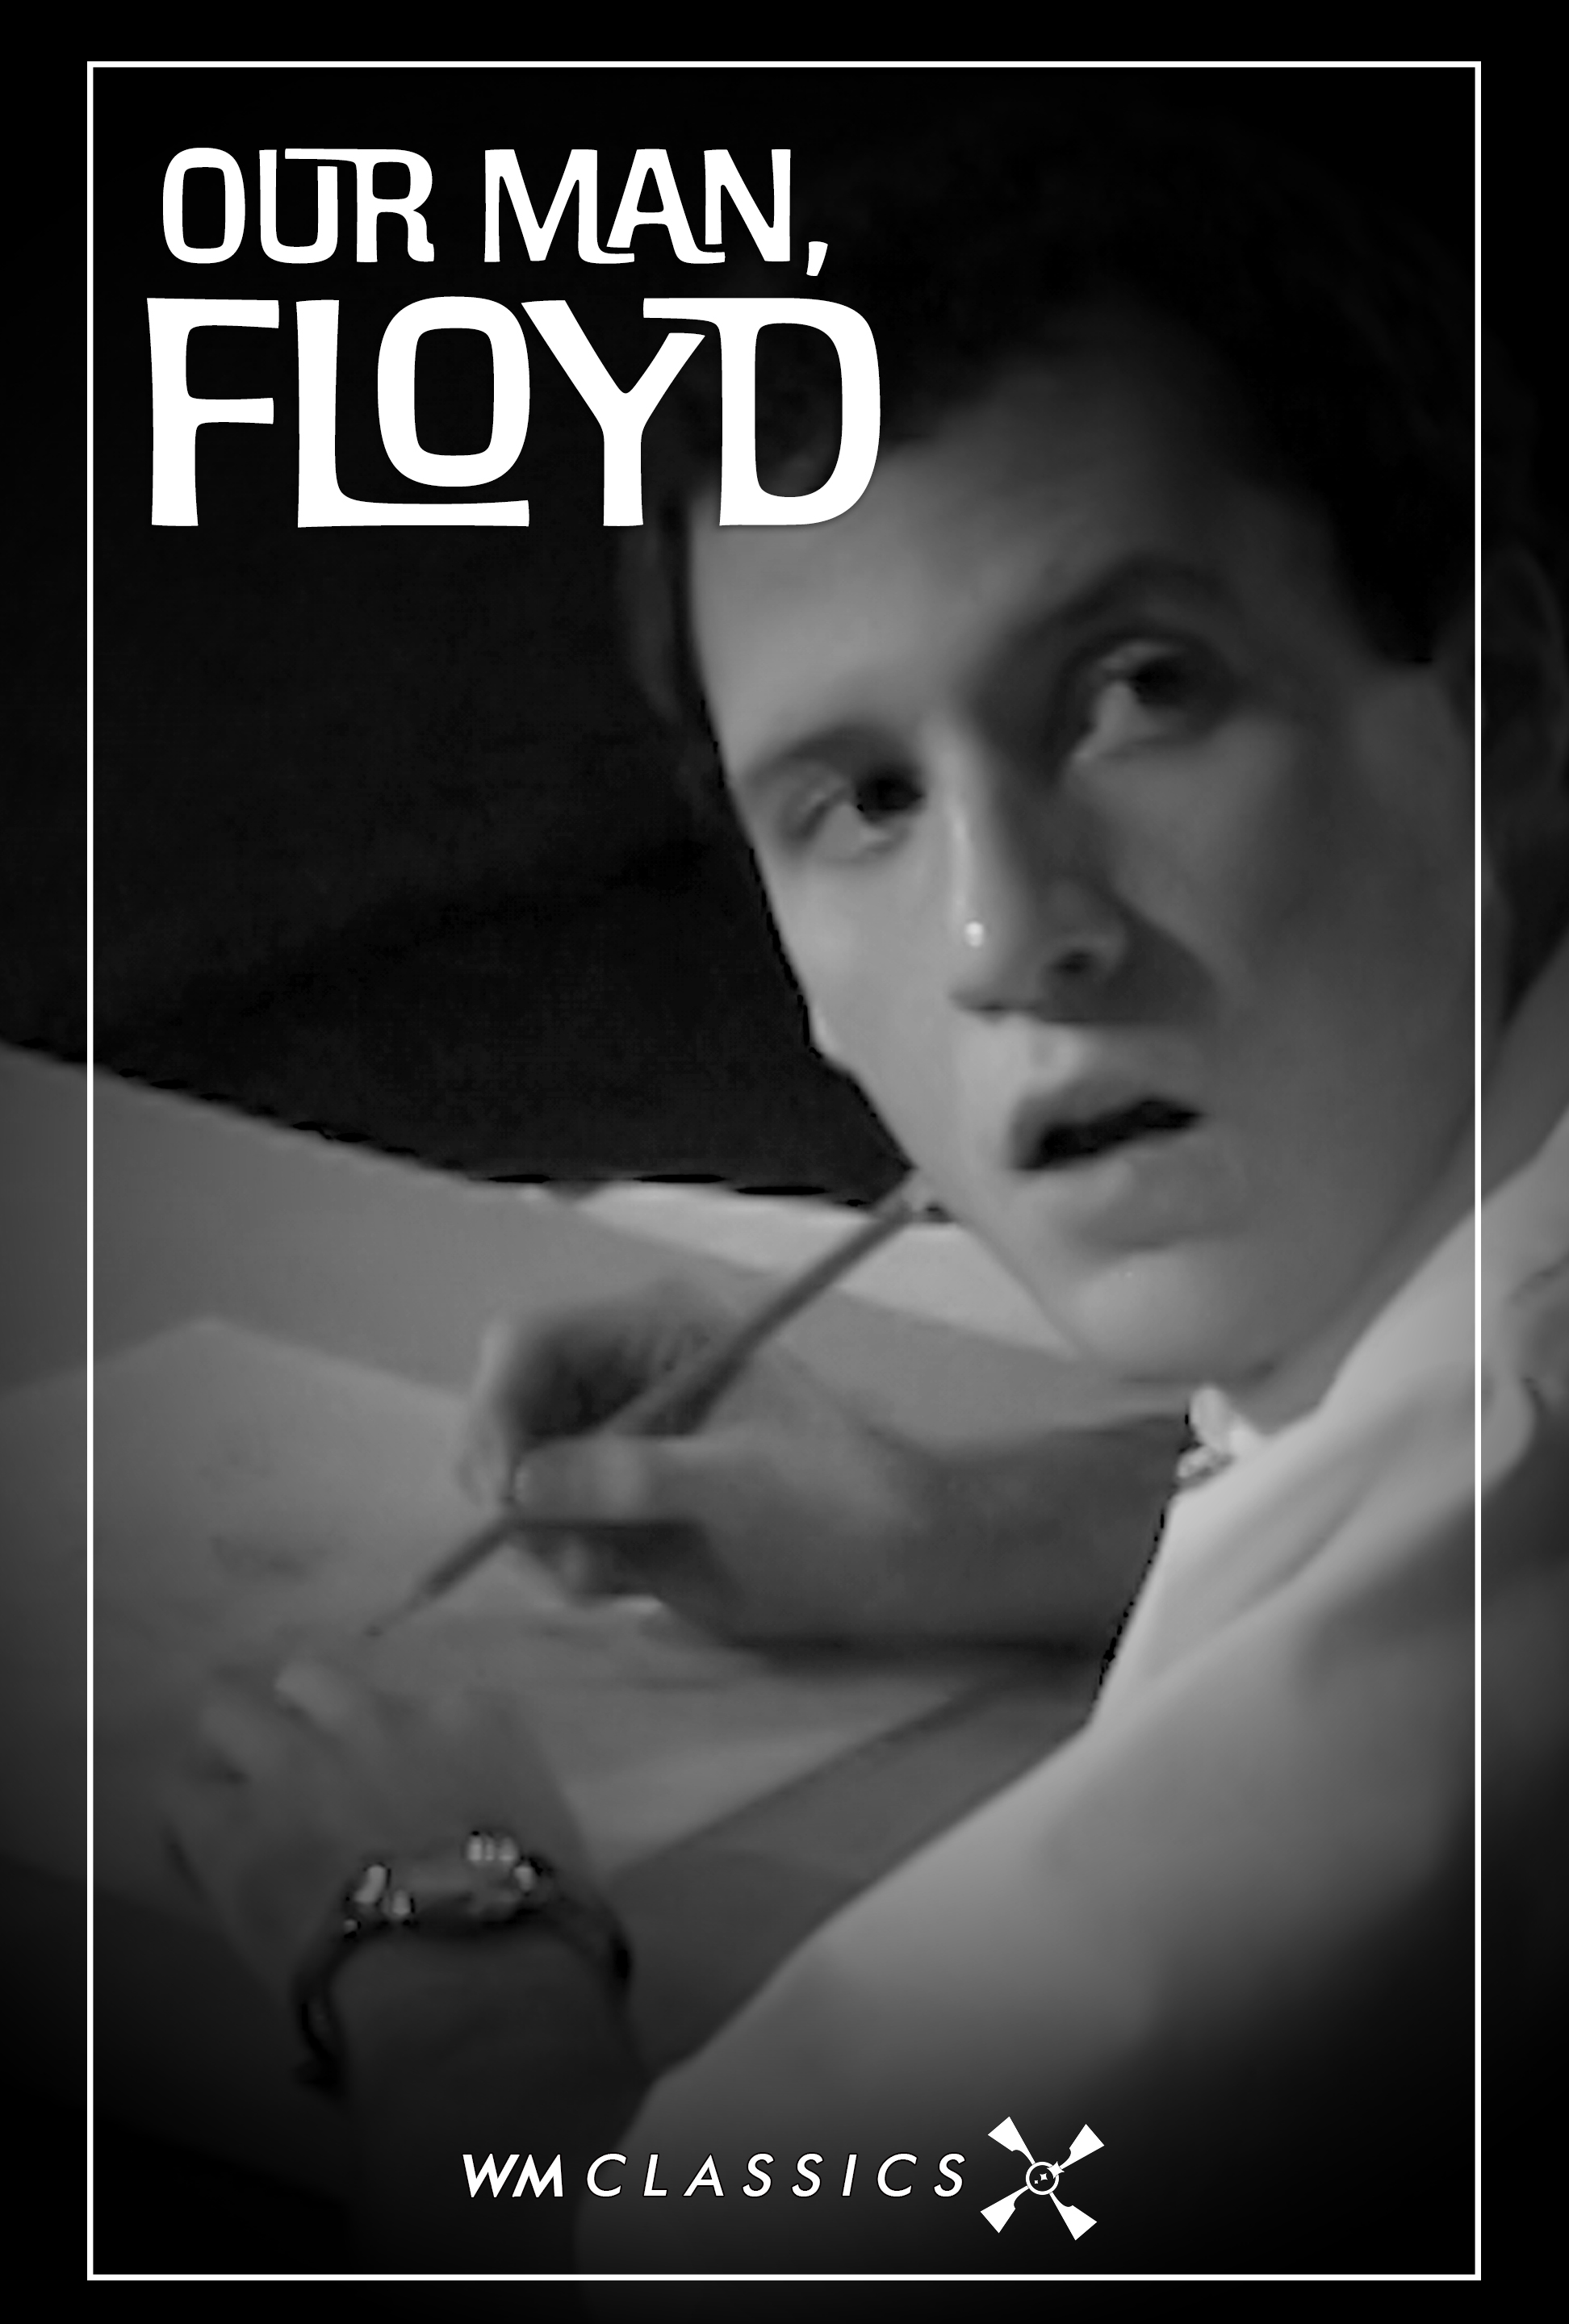 Our Man, Floyd